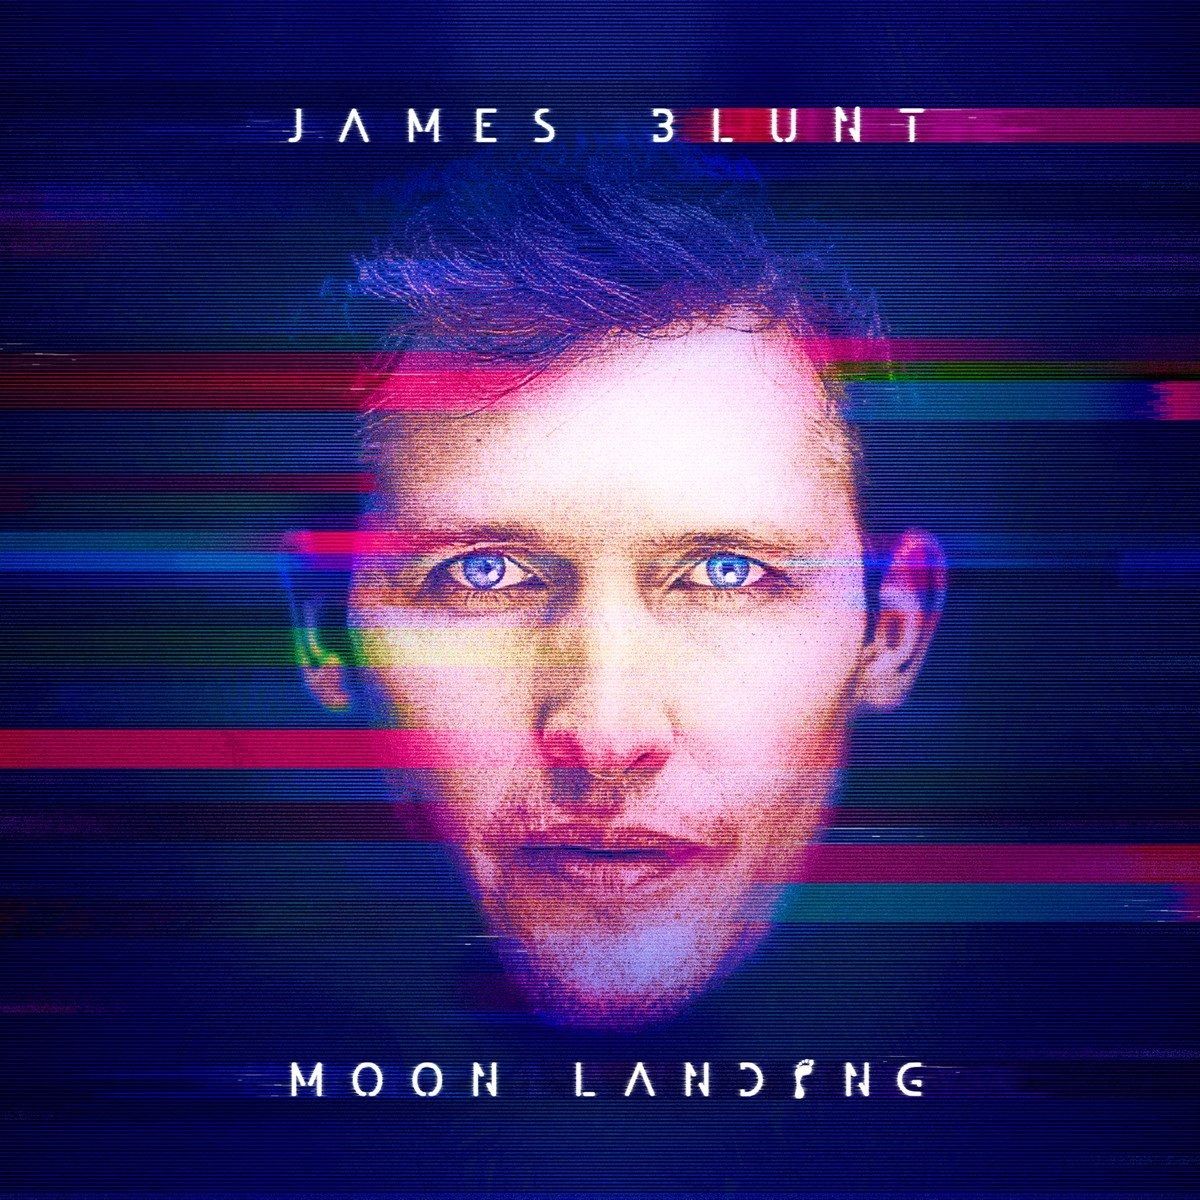 Imagem do álbum Moon Landing (Deluxe Edition) do(a) artista James Blunt